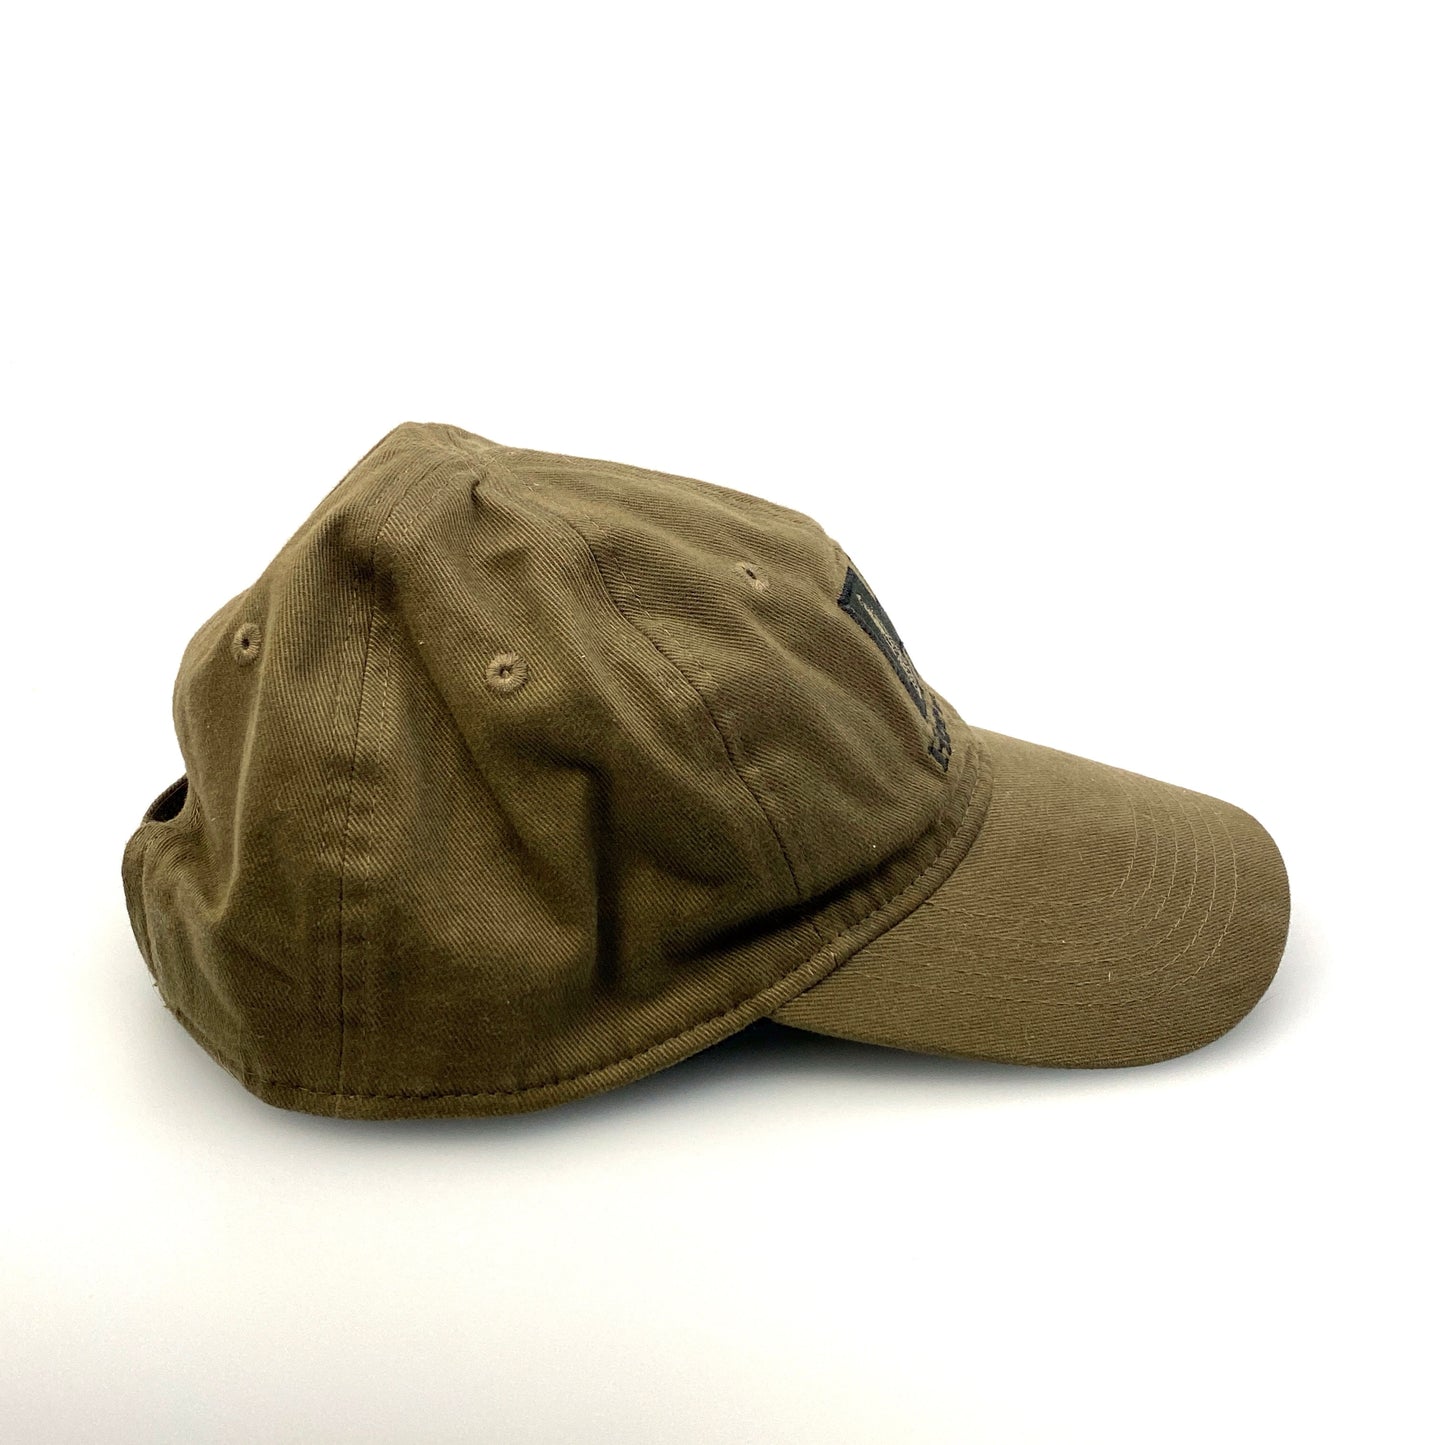 Hornady Manufacturing Mens Brown Dad Baseball Hat Logo Cap